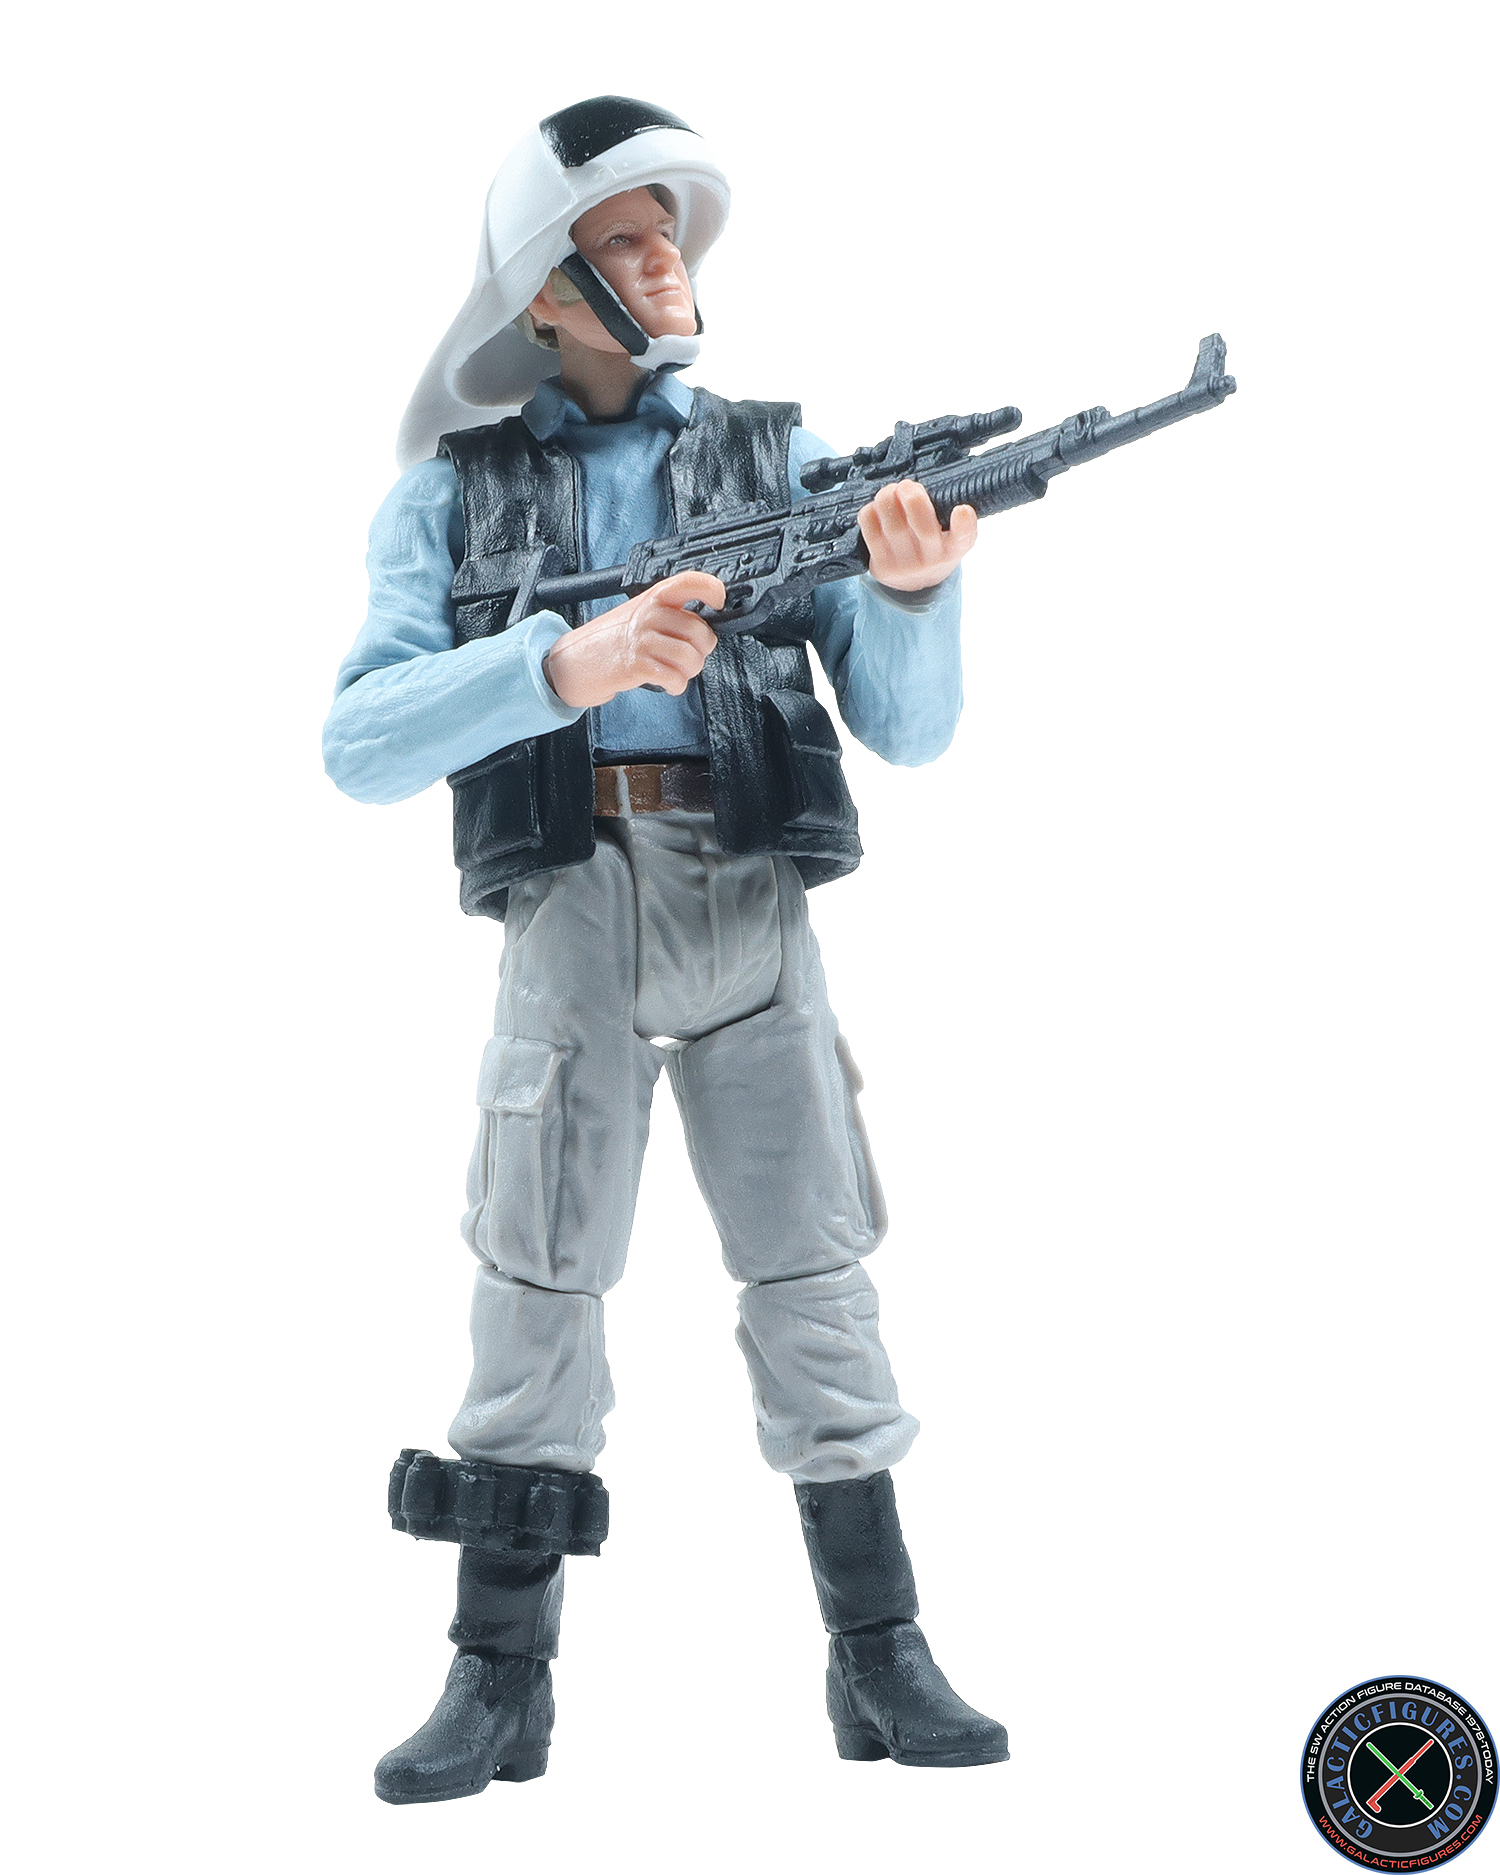 Pello Scrambas Rebel Fleet Trooper 4-Pack